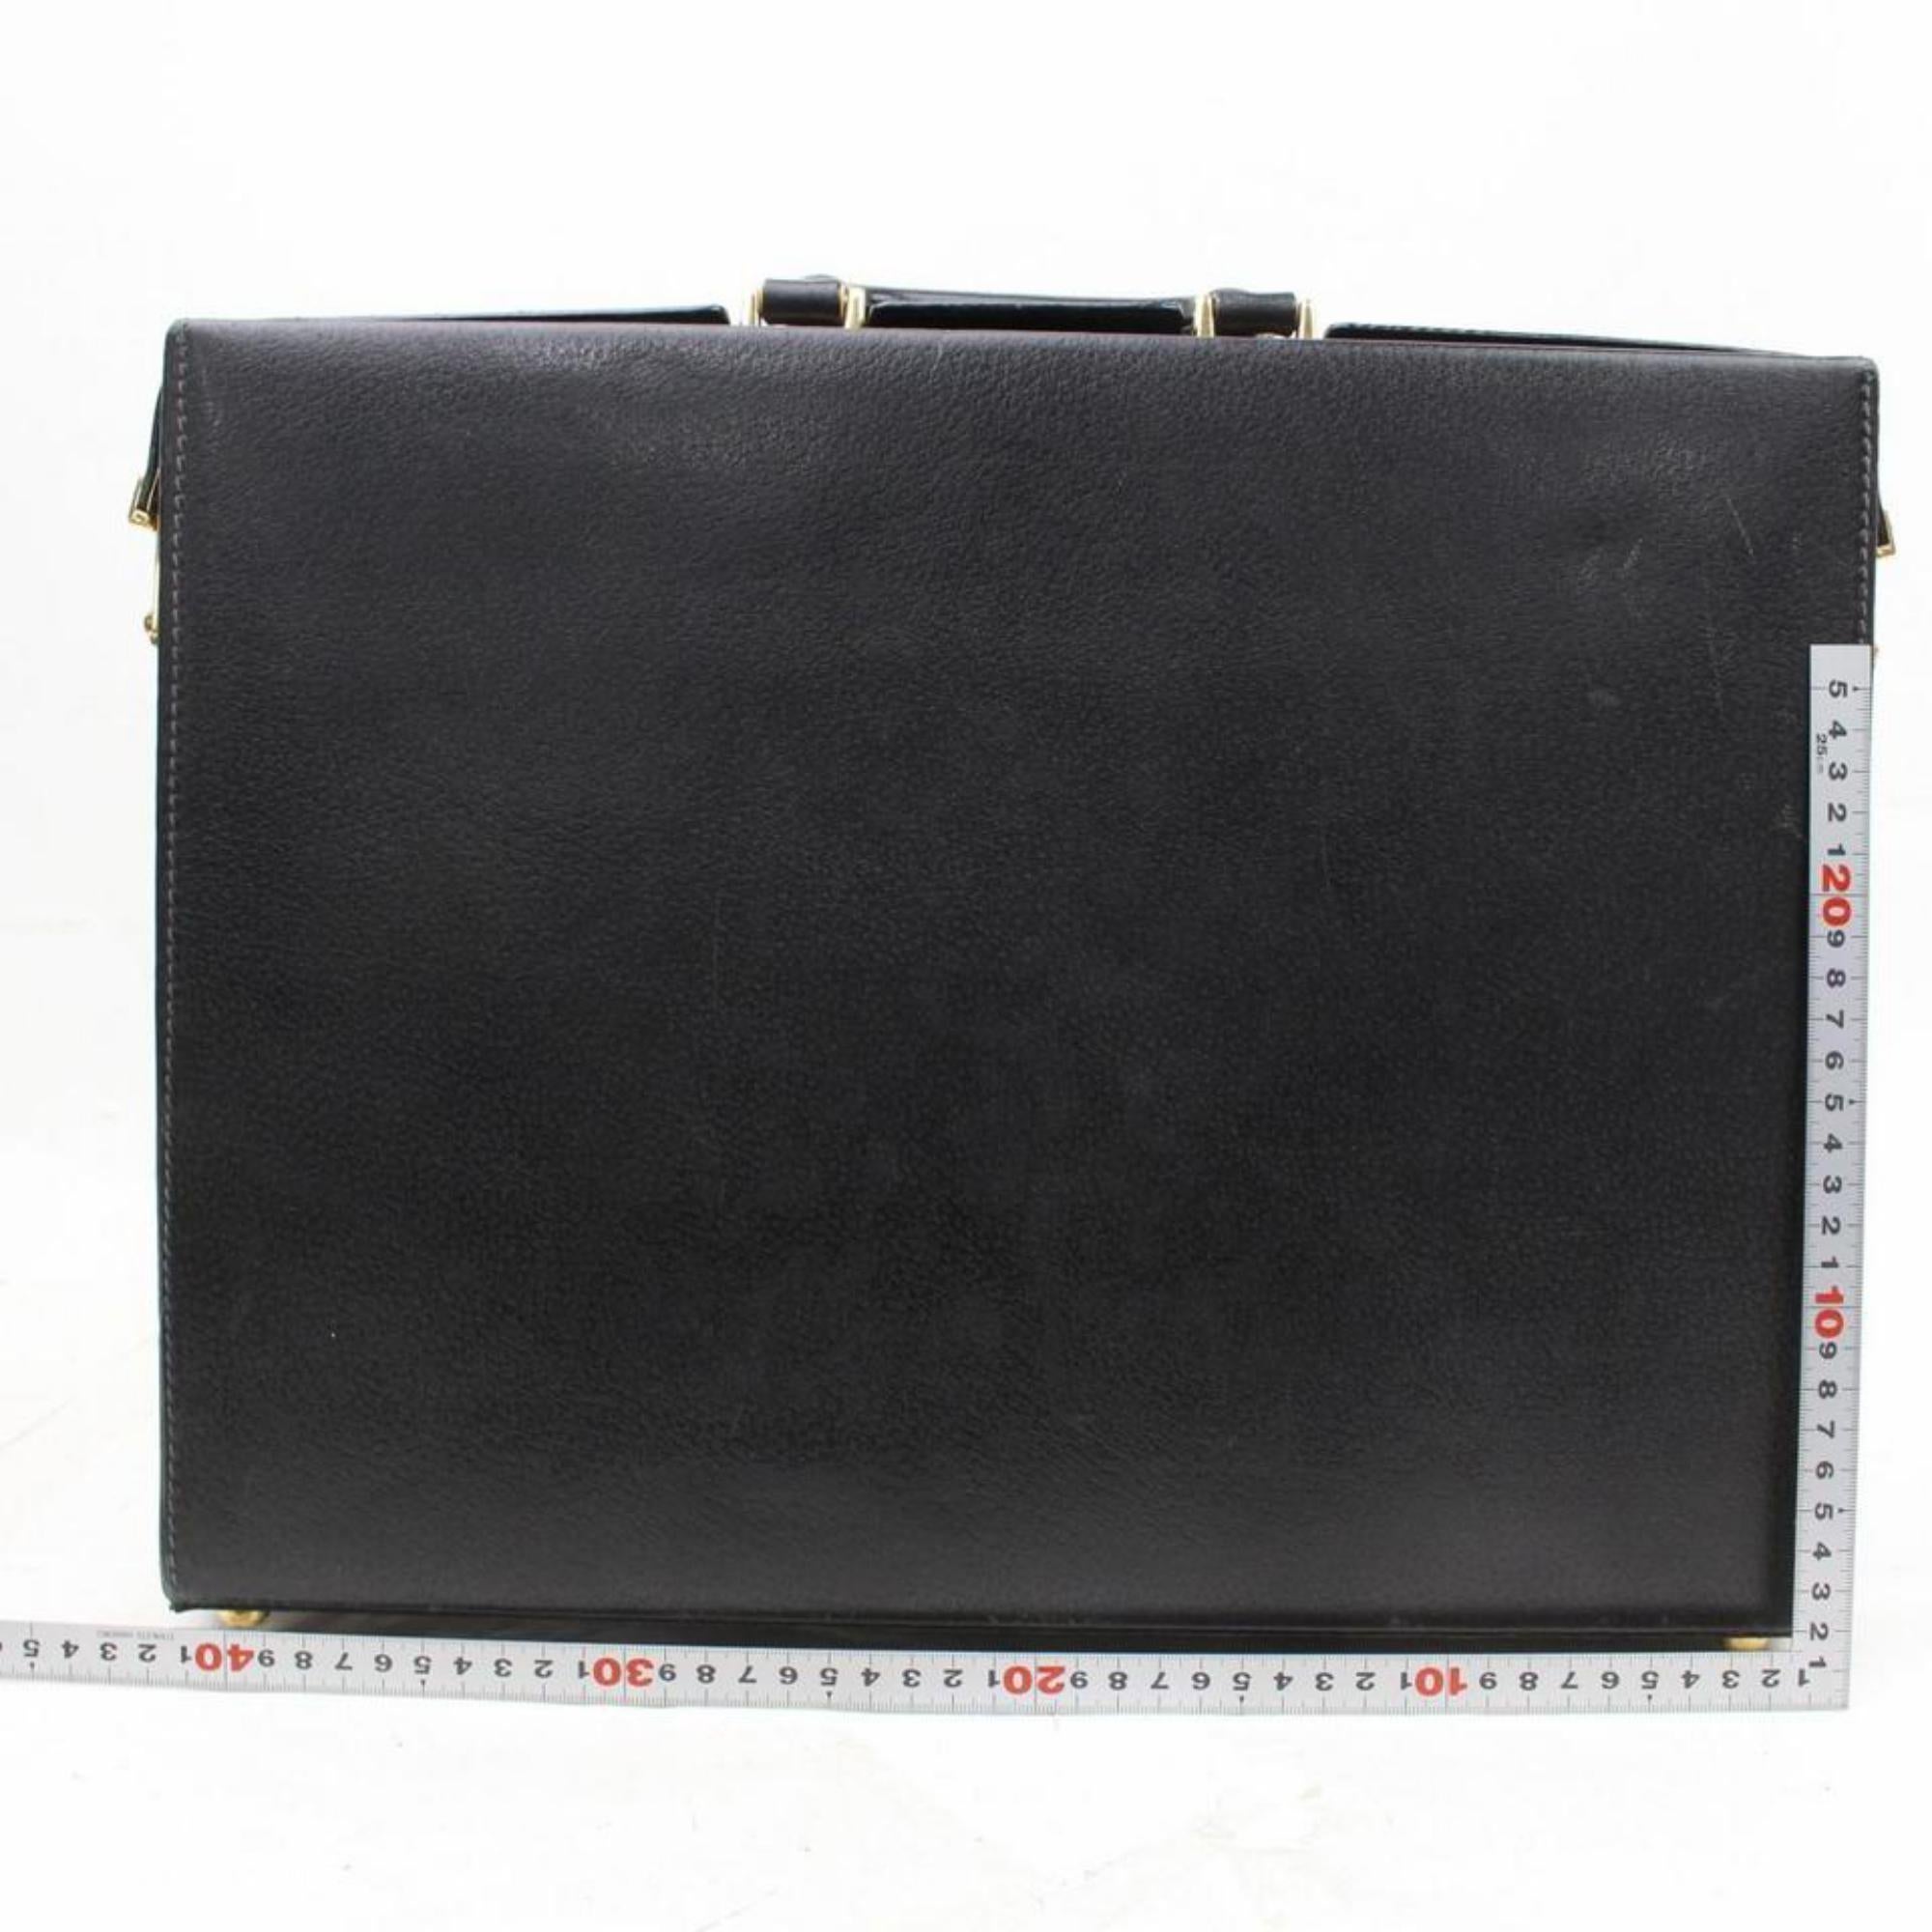 Gucci Attache Briefcase 866215 Black Leather Laptop Bag For Sale 1